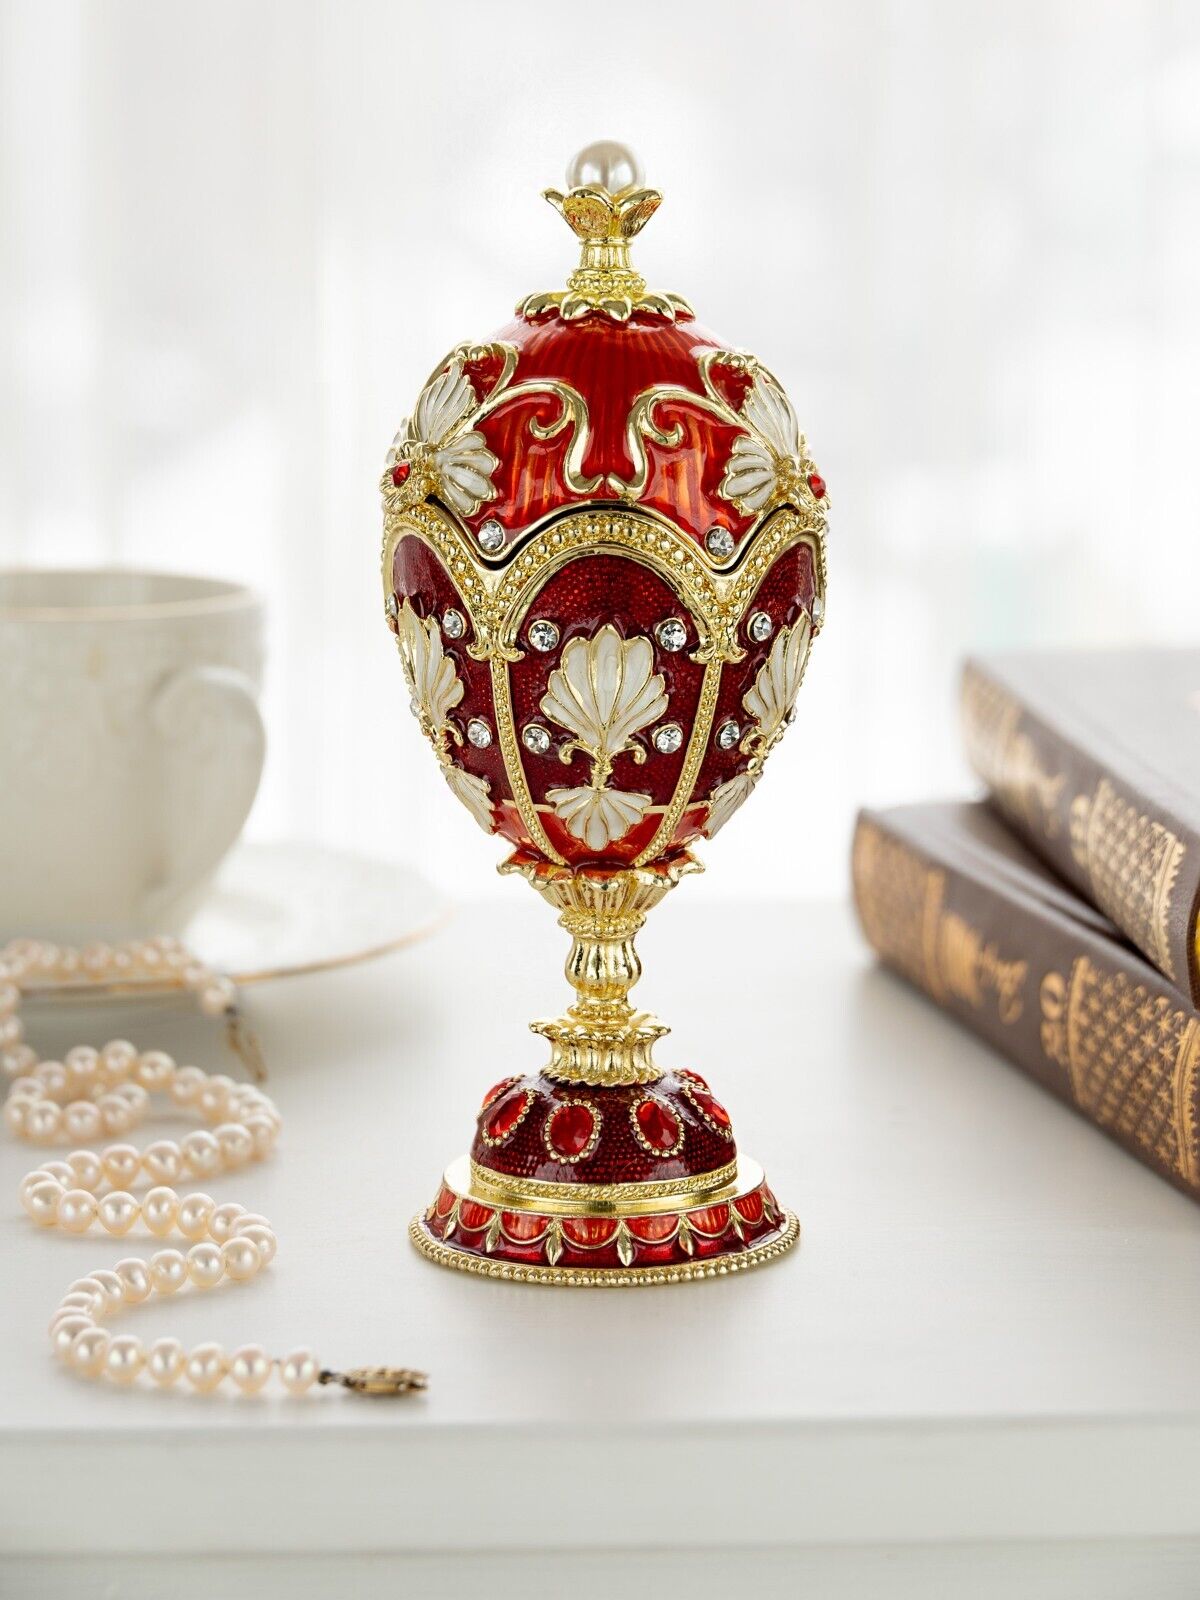 Keren Kopal Red music Egg  Trinket Box Decorated with Austrian Crystals